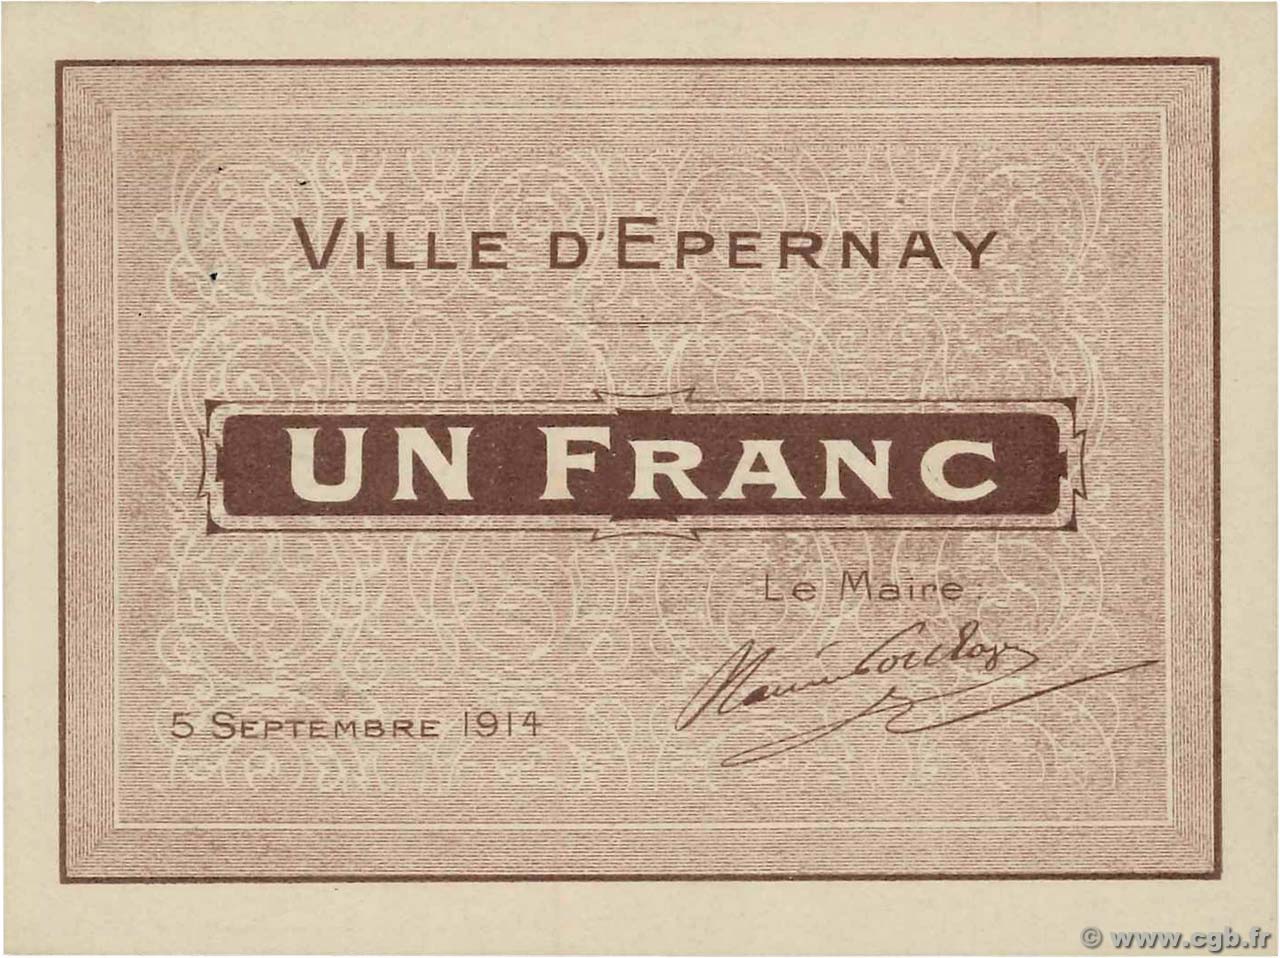 1 Franc FRANCE régionalisme et divers Epernay 1914 JP.51-16 SPL